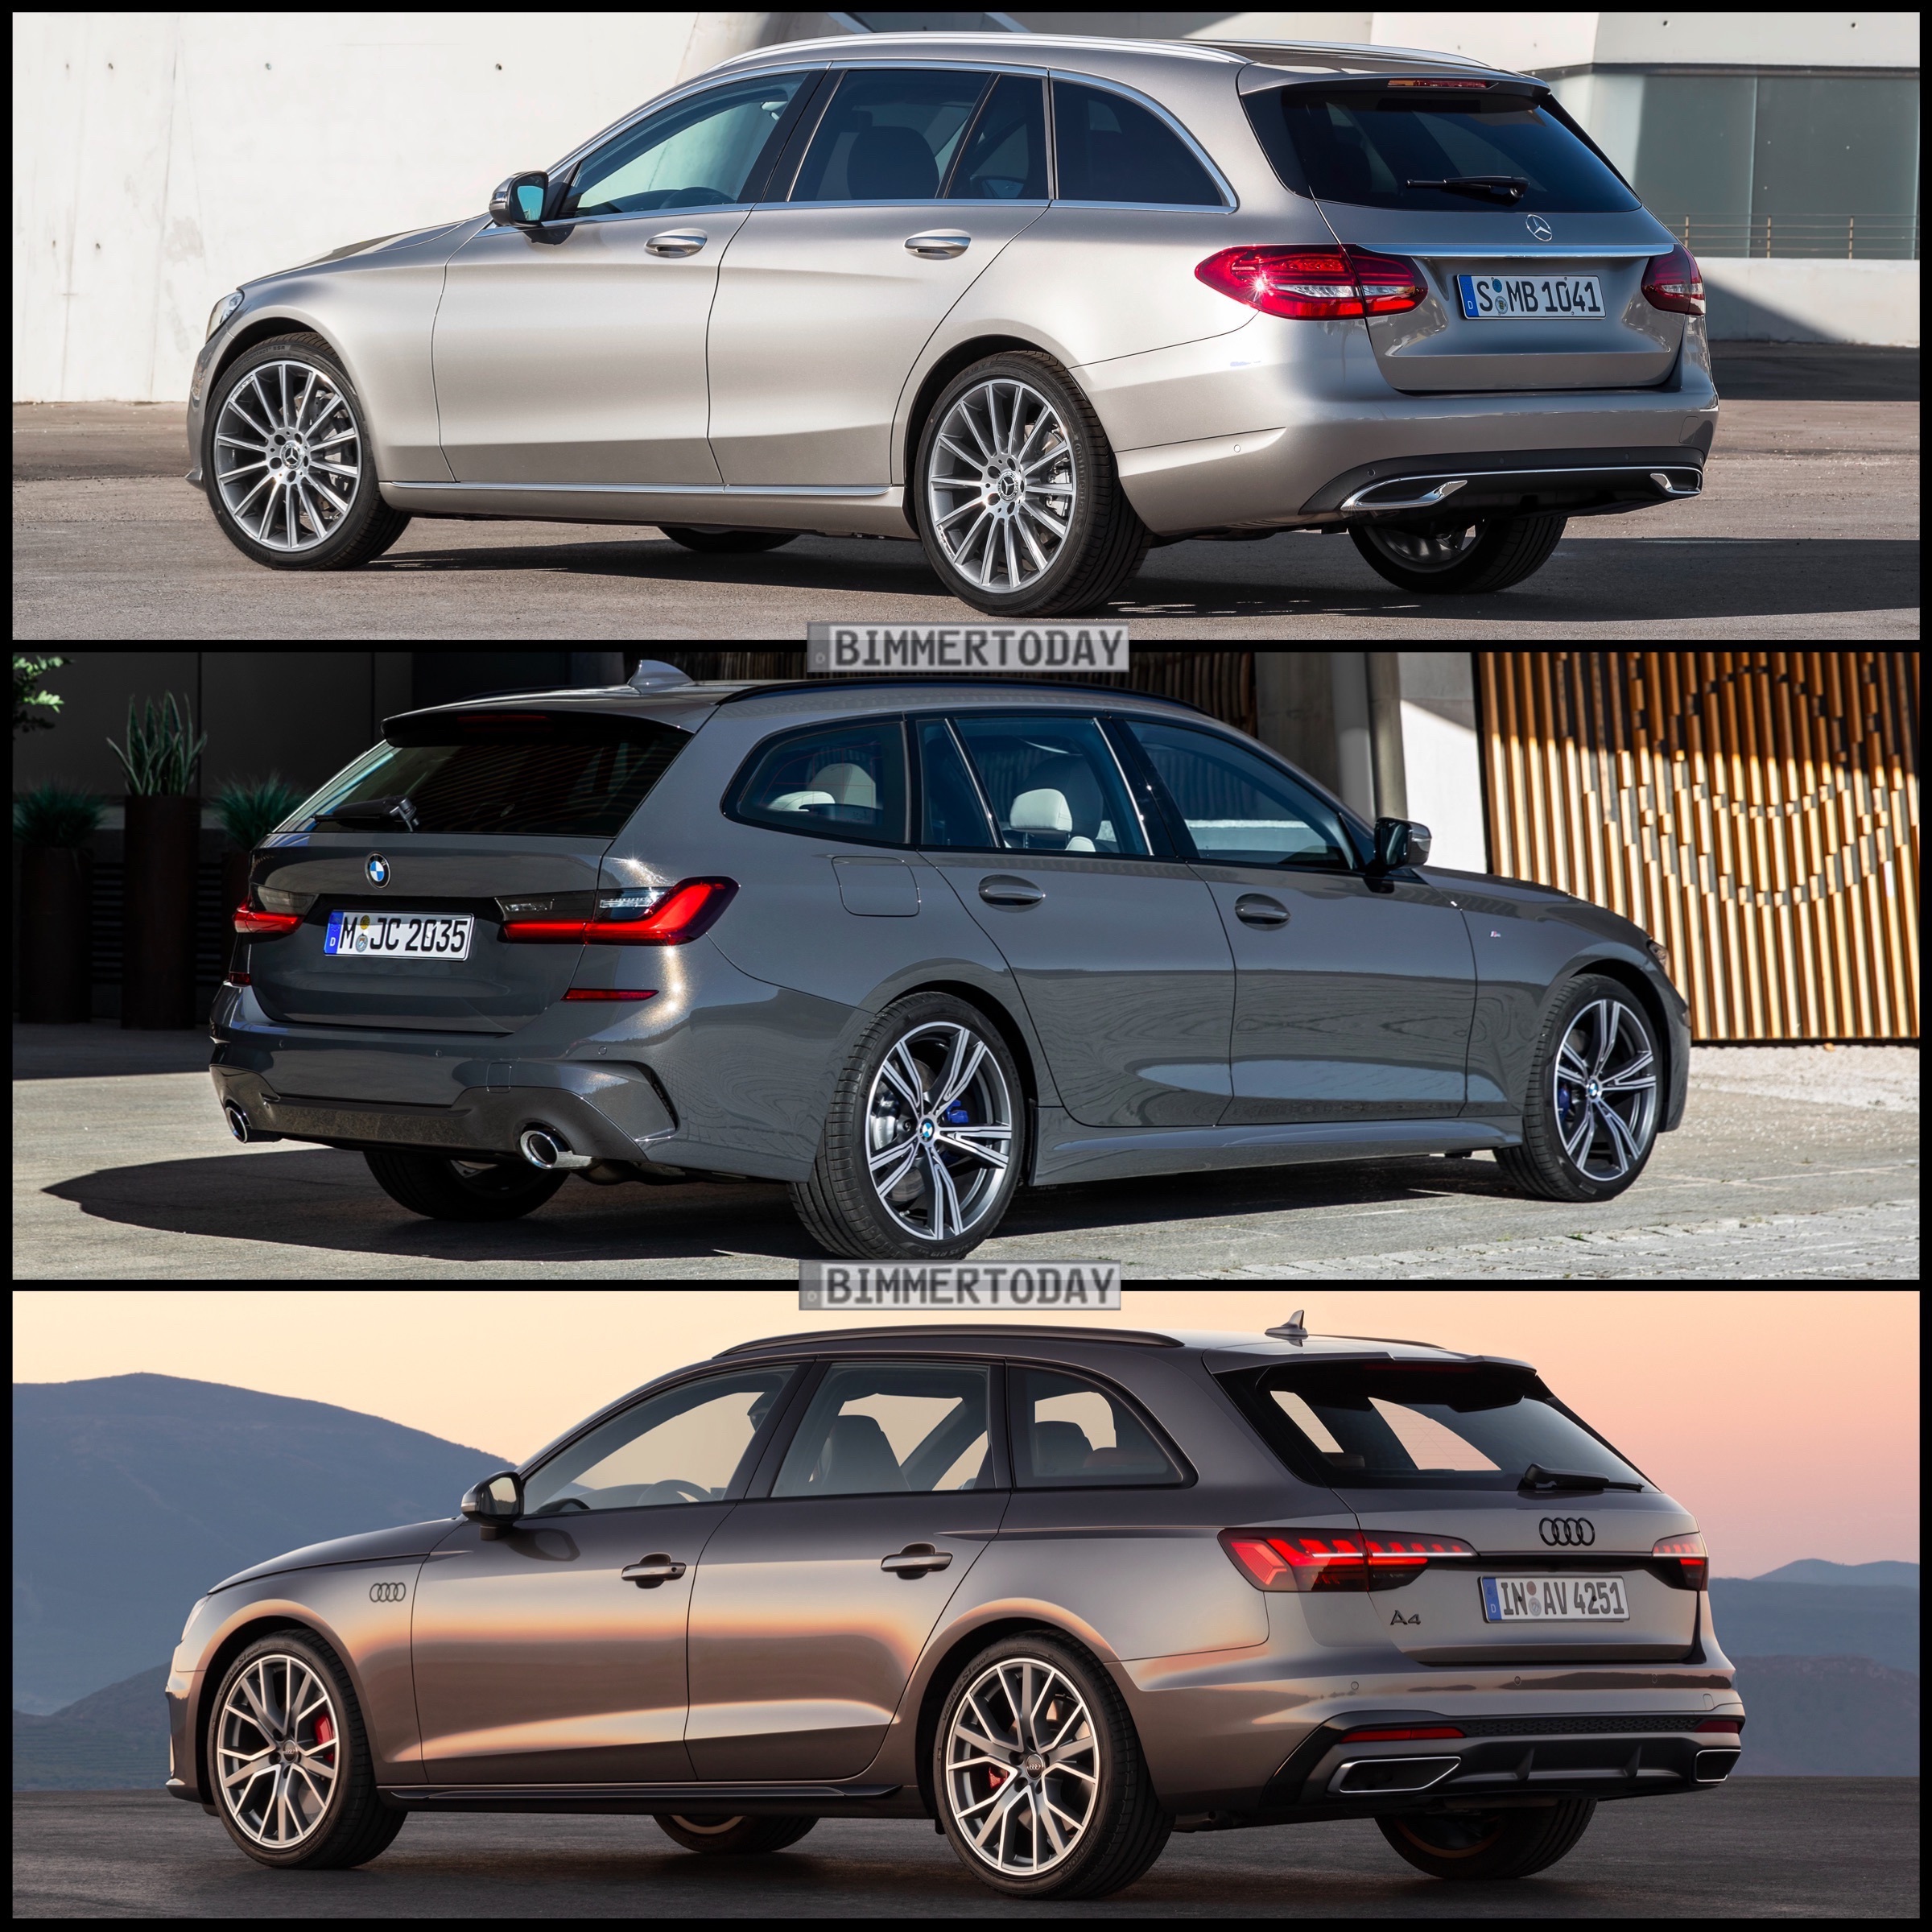 Bild-Vergleich-BMW-3er-Touring-G21-Audi-A4-Avant-Mercedes-C-Klasse-T-Modell-2019-02.jpg